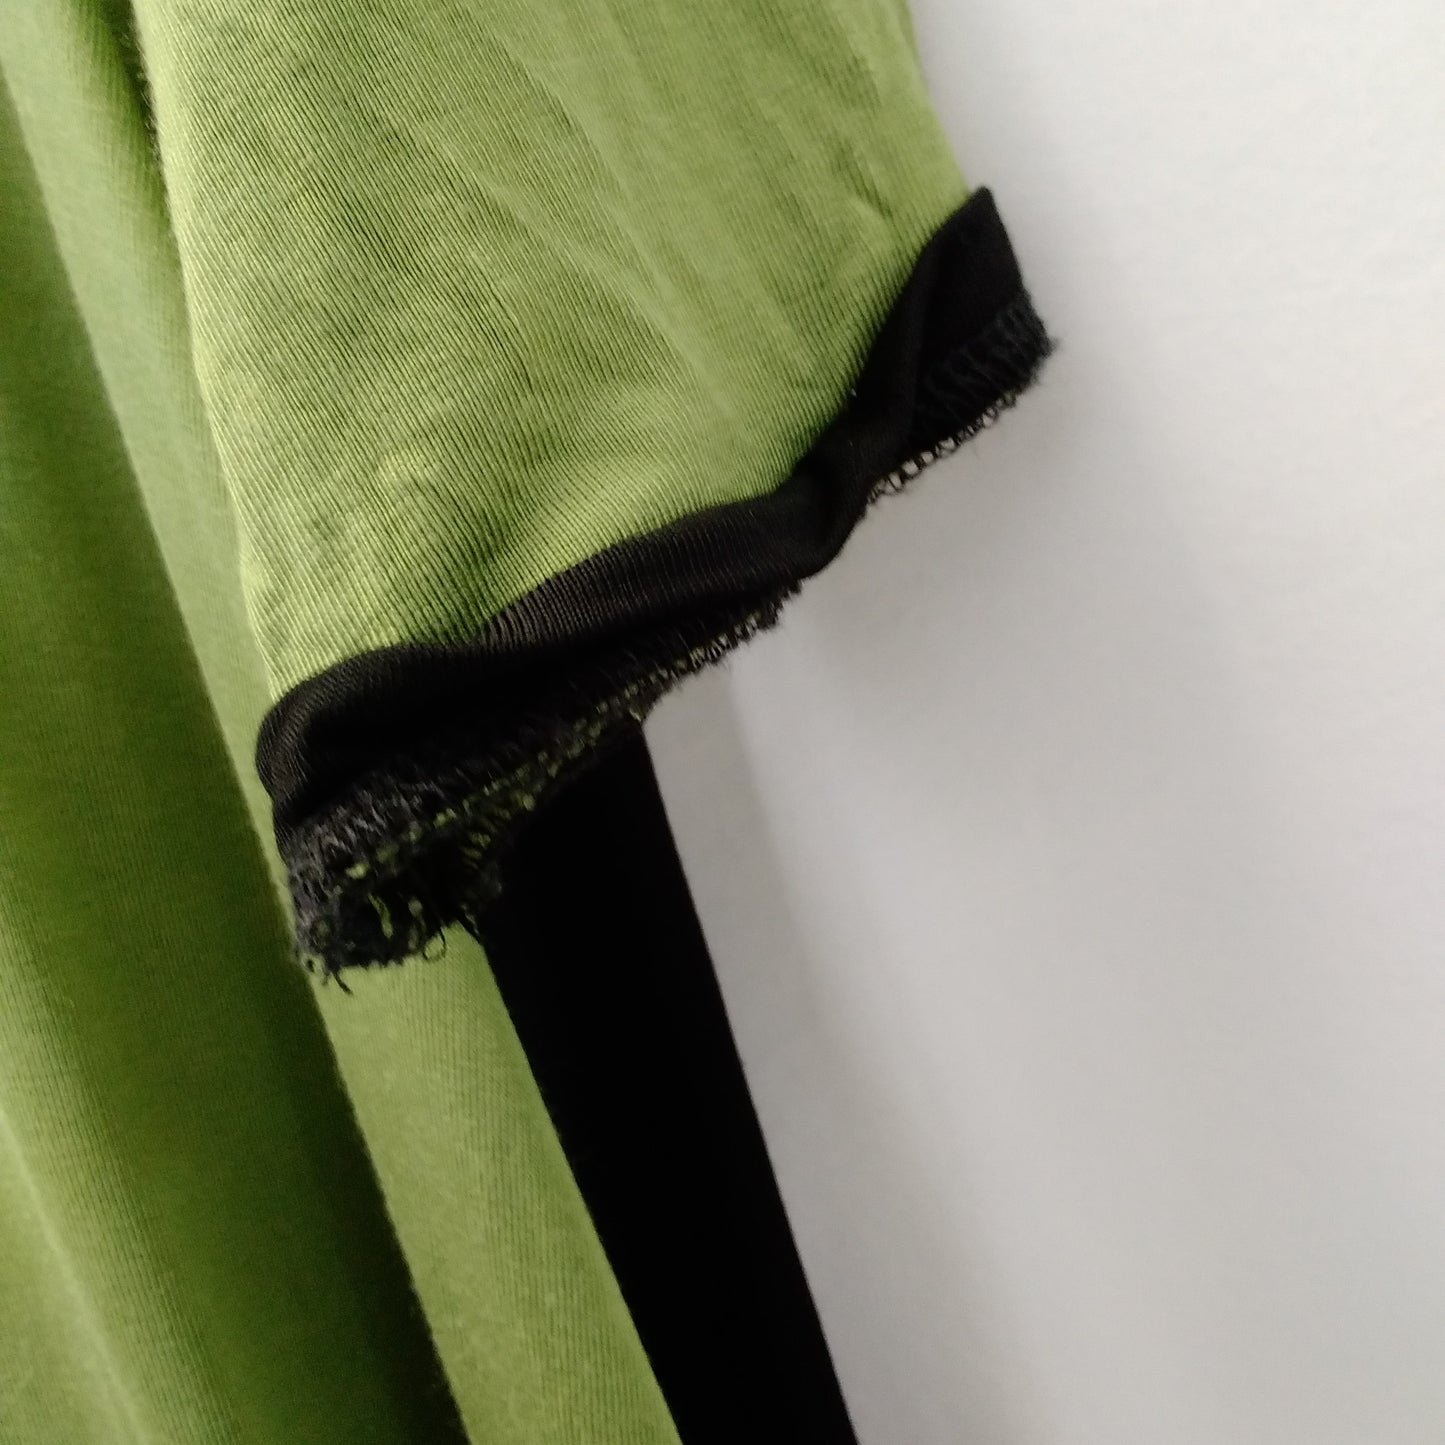 Ozai n Ku Green White Black Viscose Blend 3/4 Sleeve Geo Panel Dress - M